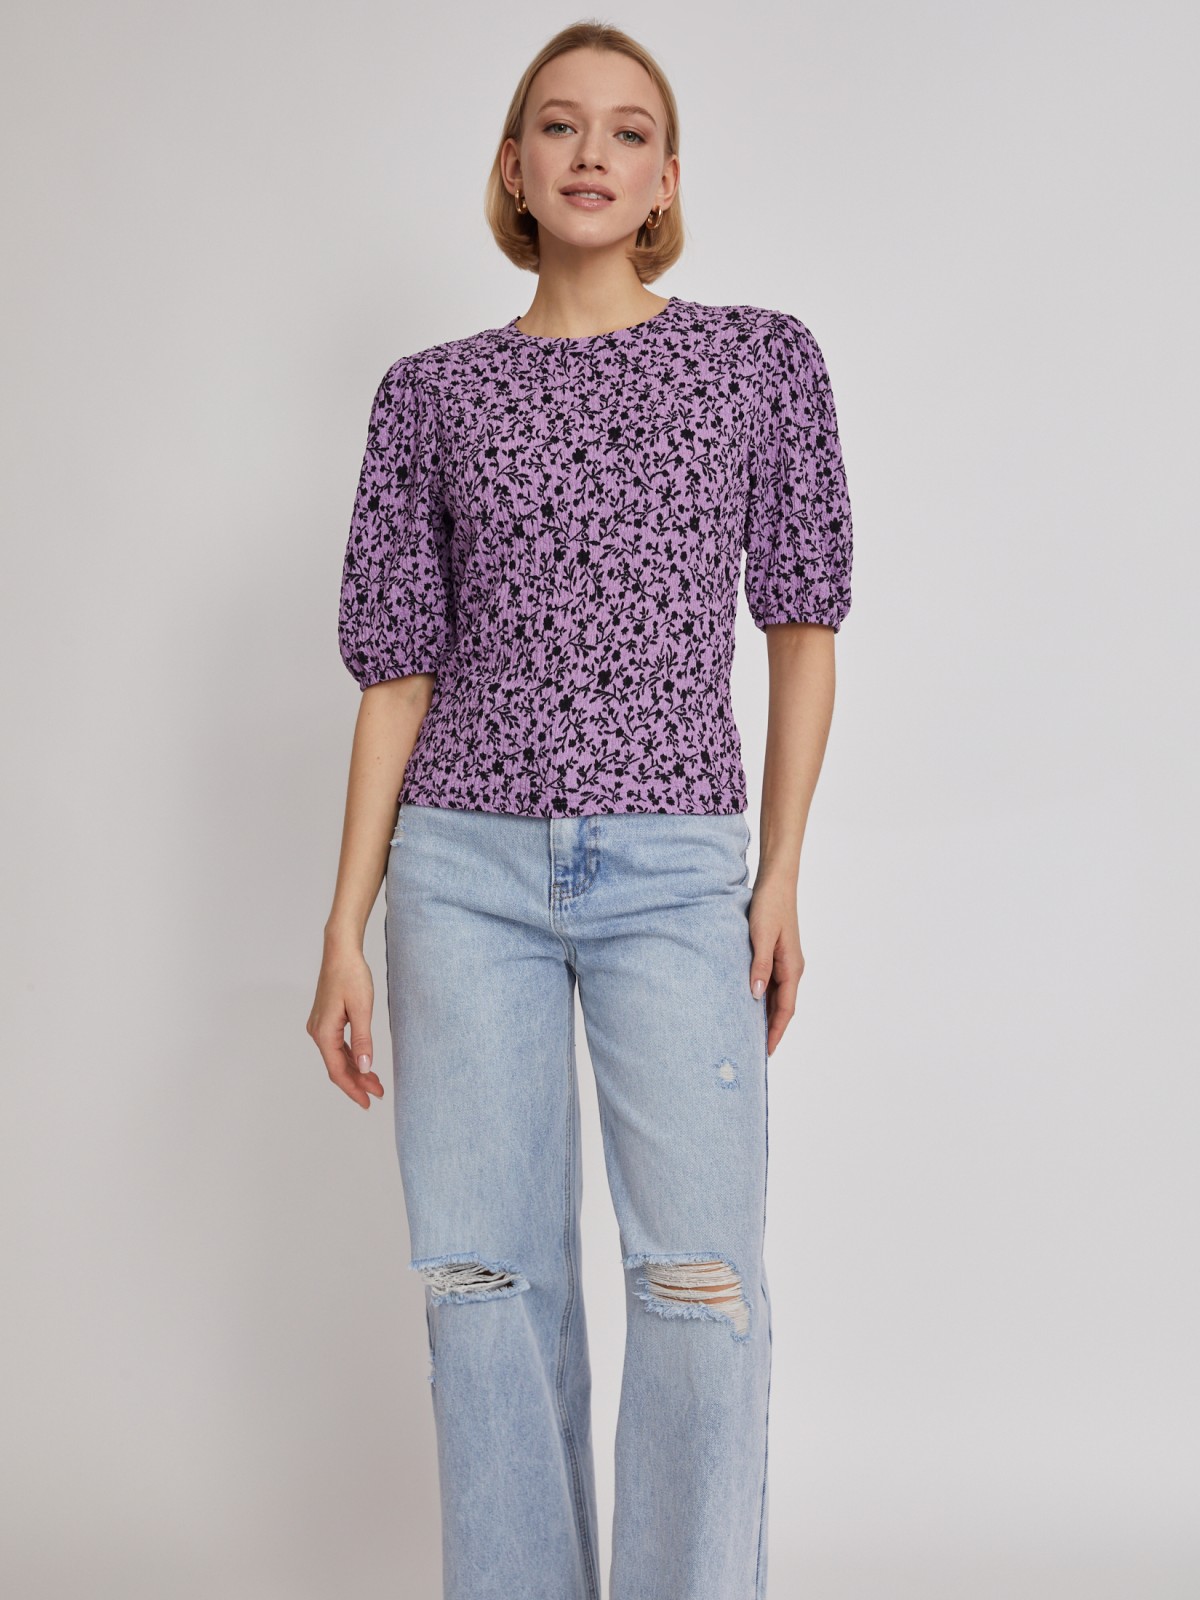 Топ-блузка с коротким рукавом zolla 02321122L041, цвет лиловый, размер XS - фото 3